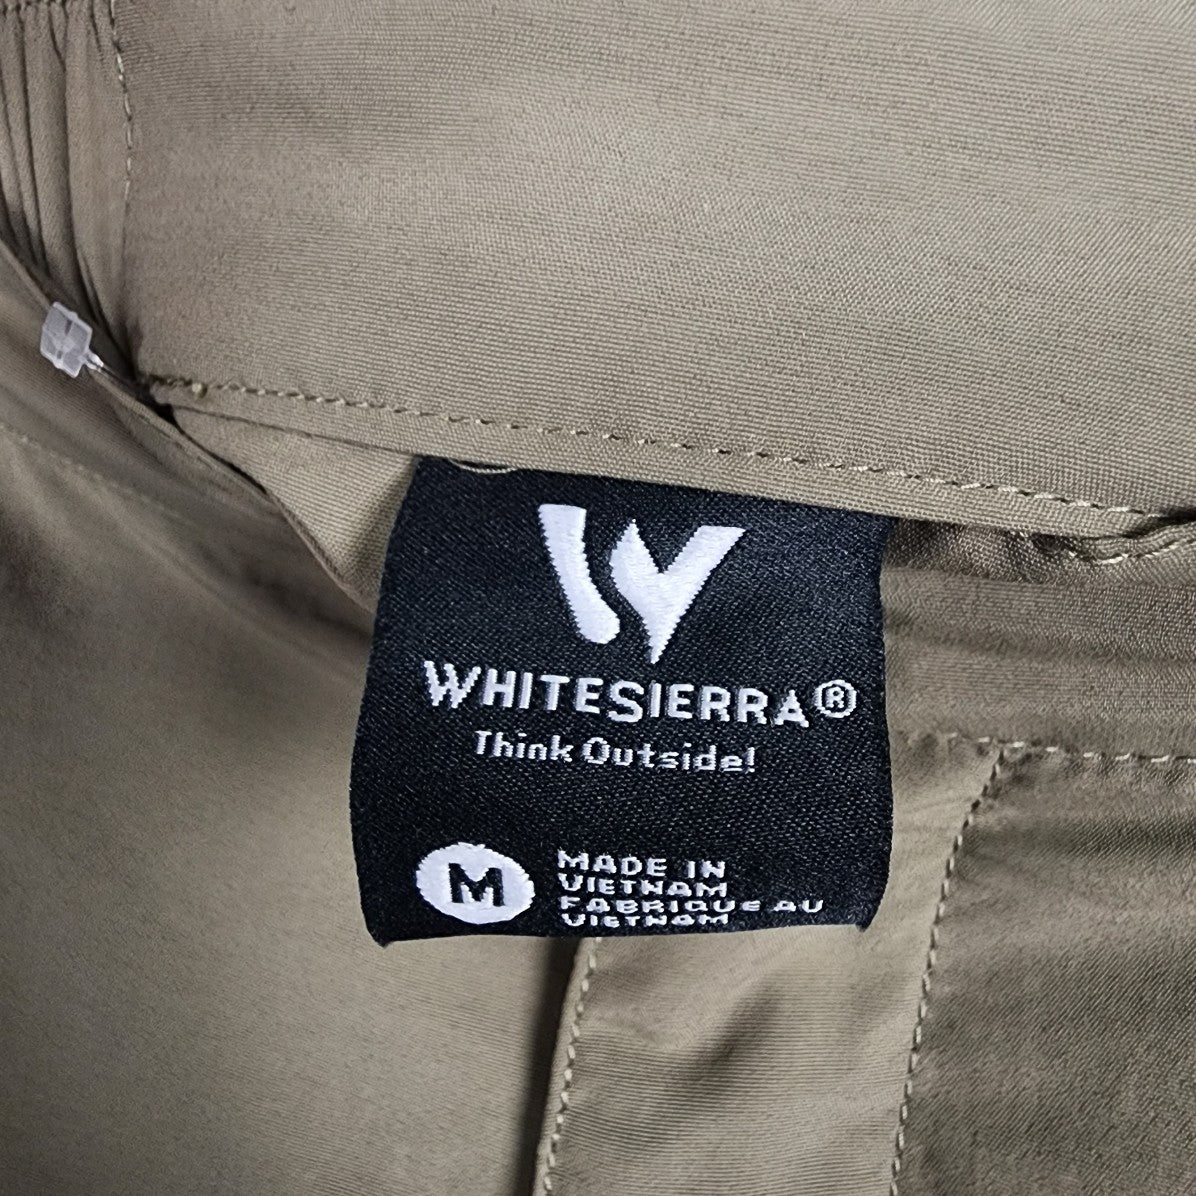 White Sierra Khaki Active Wear Shorts Size M